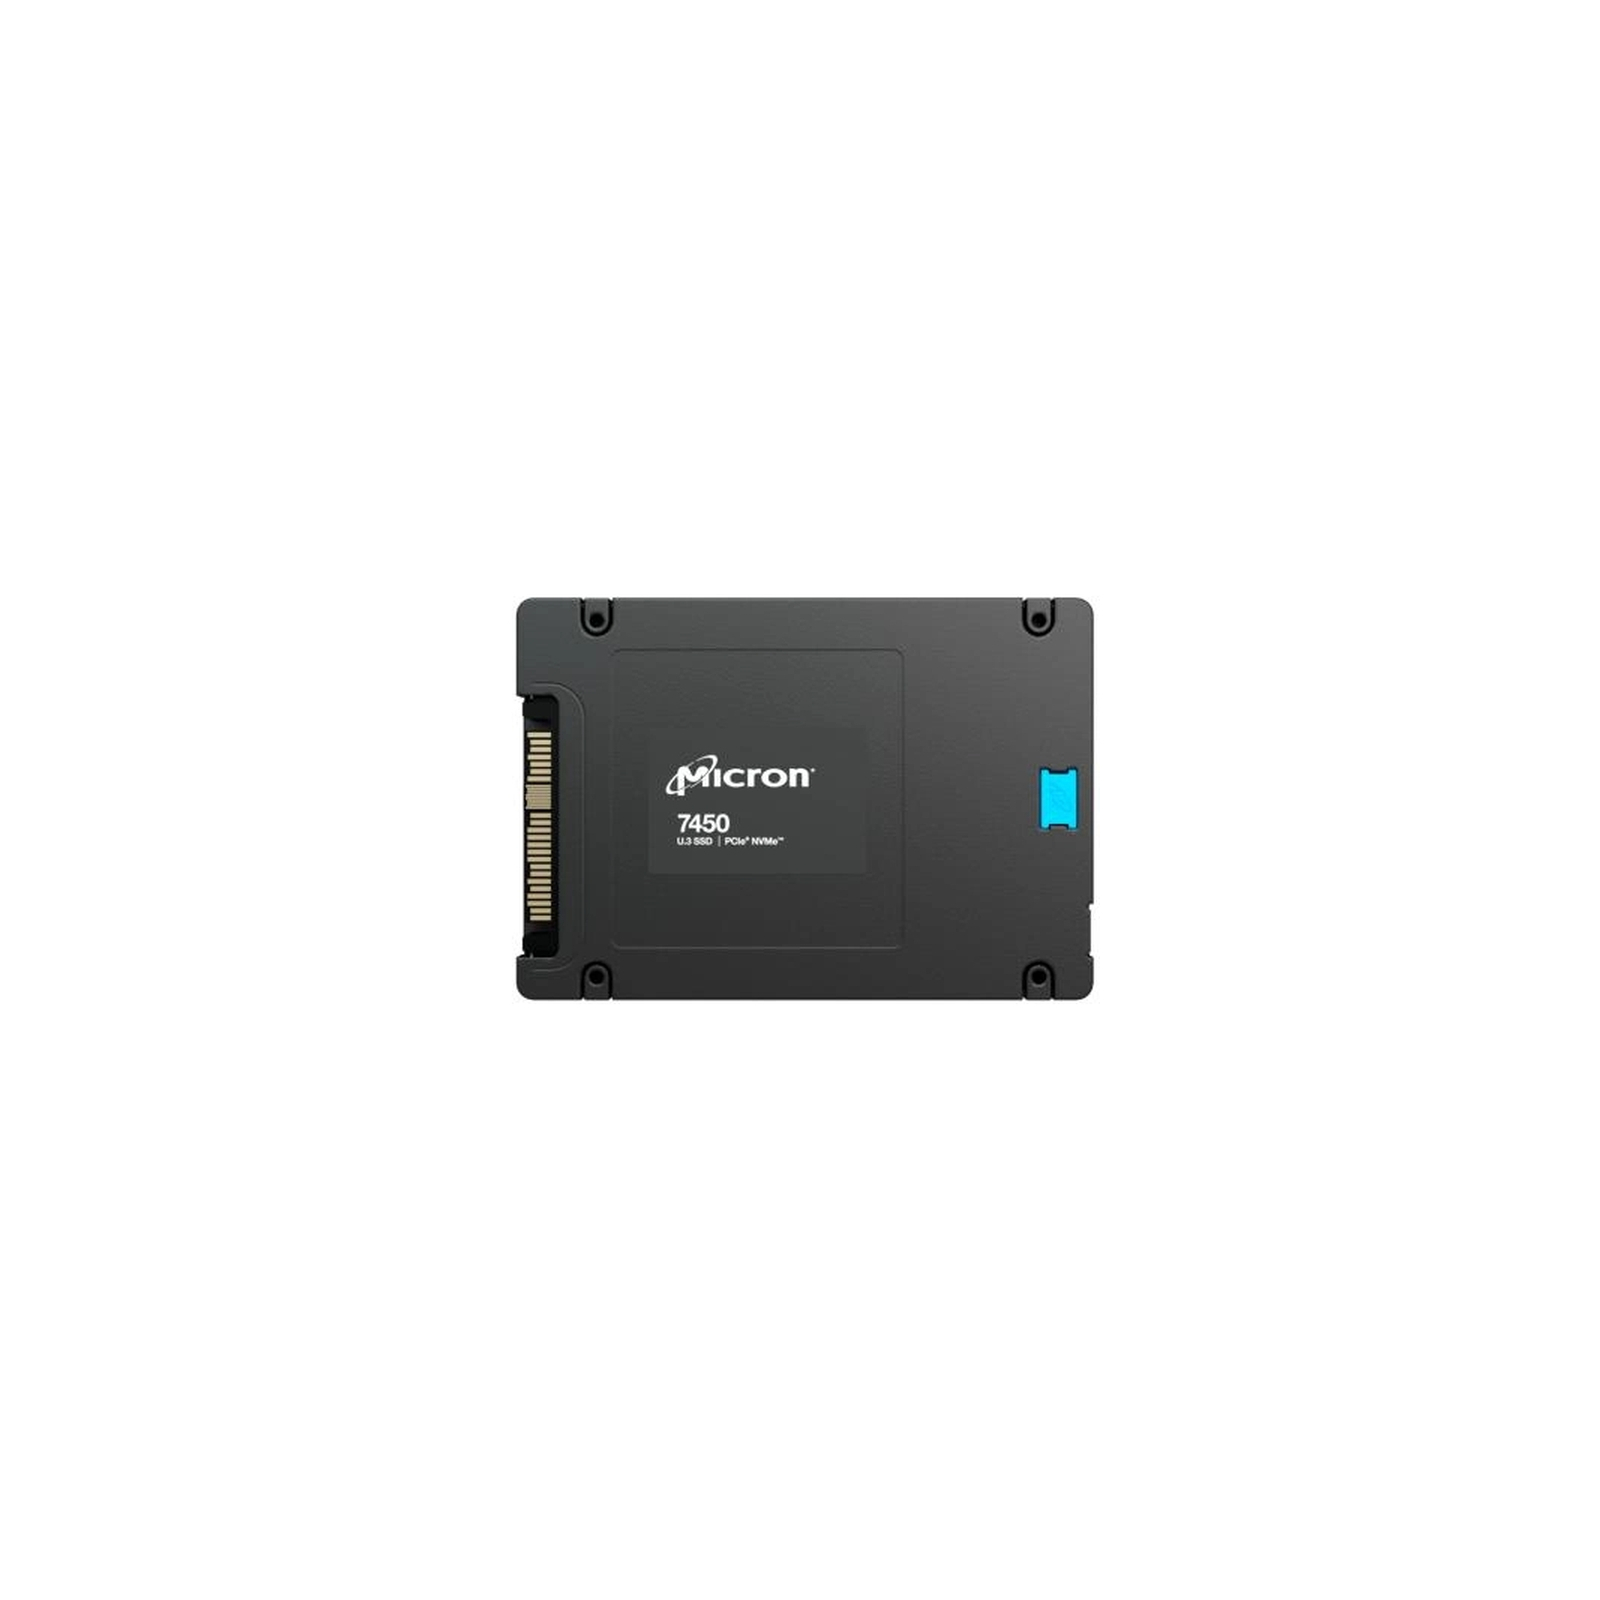 Накопитель SSD U.3 2.5" 6.4TB 7450 MAX 15mm Micron (MTFDKCC6T4TFS-1BC15ABYYR) изображение 3